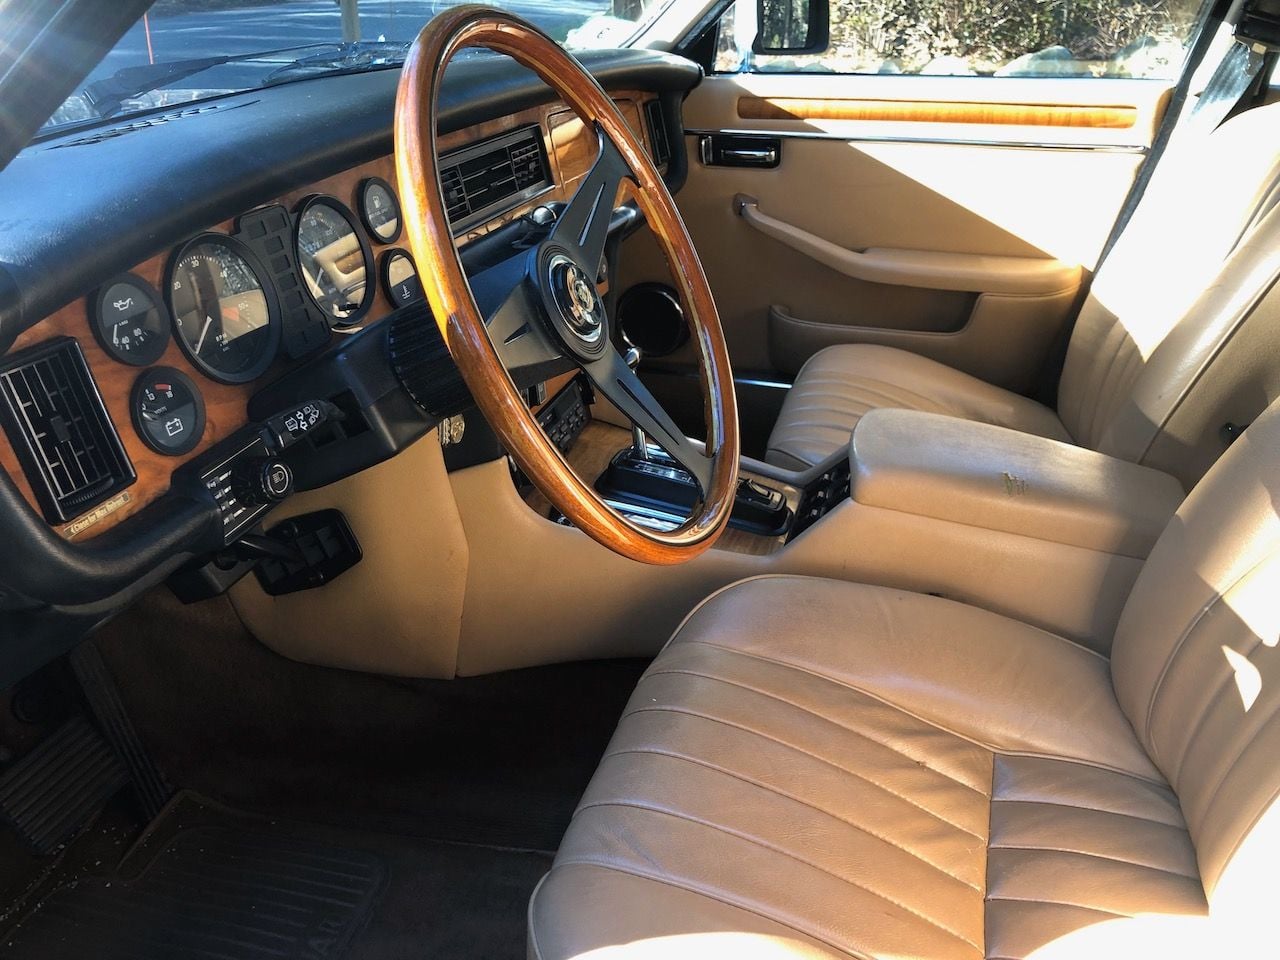 1987 Jaguar XJ6 - Nice condition, running, classic beauty - Used - VIN SAJAV1342HC466857 - 113,800 Miles - 6 cyl - 2WD - Automatic - Sedan - Blue - Weston, MA 02493, United States